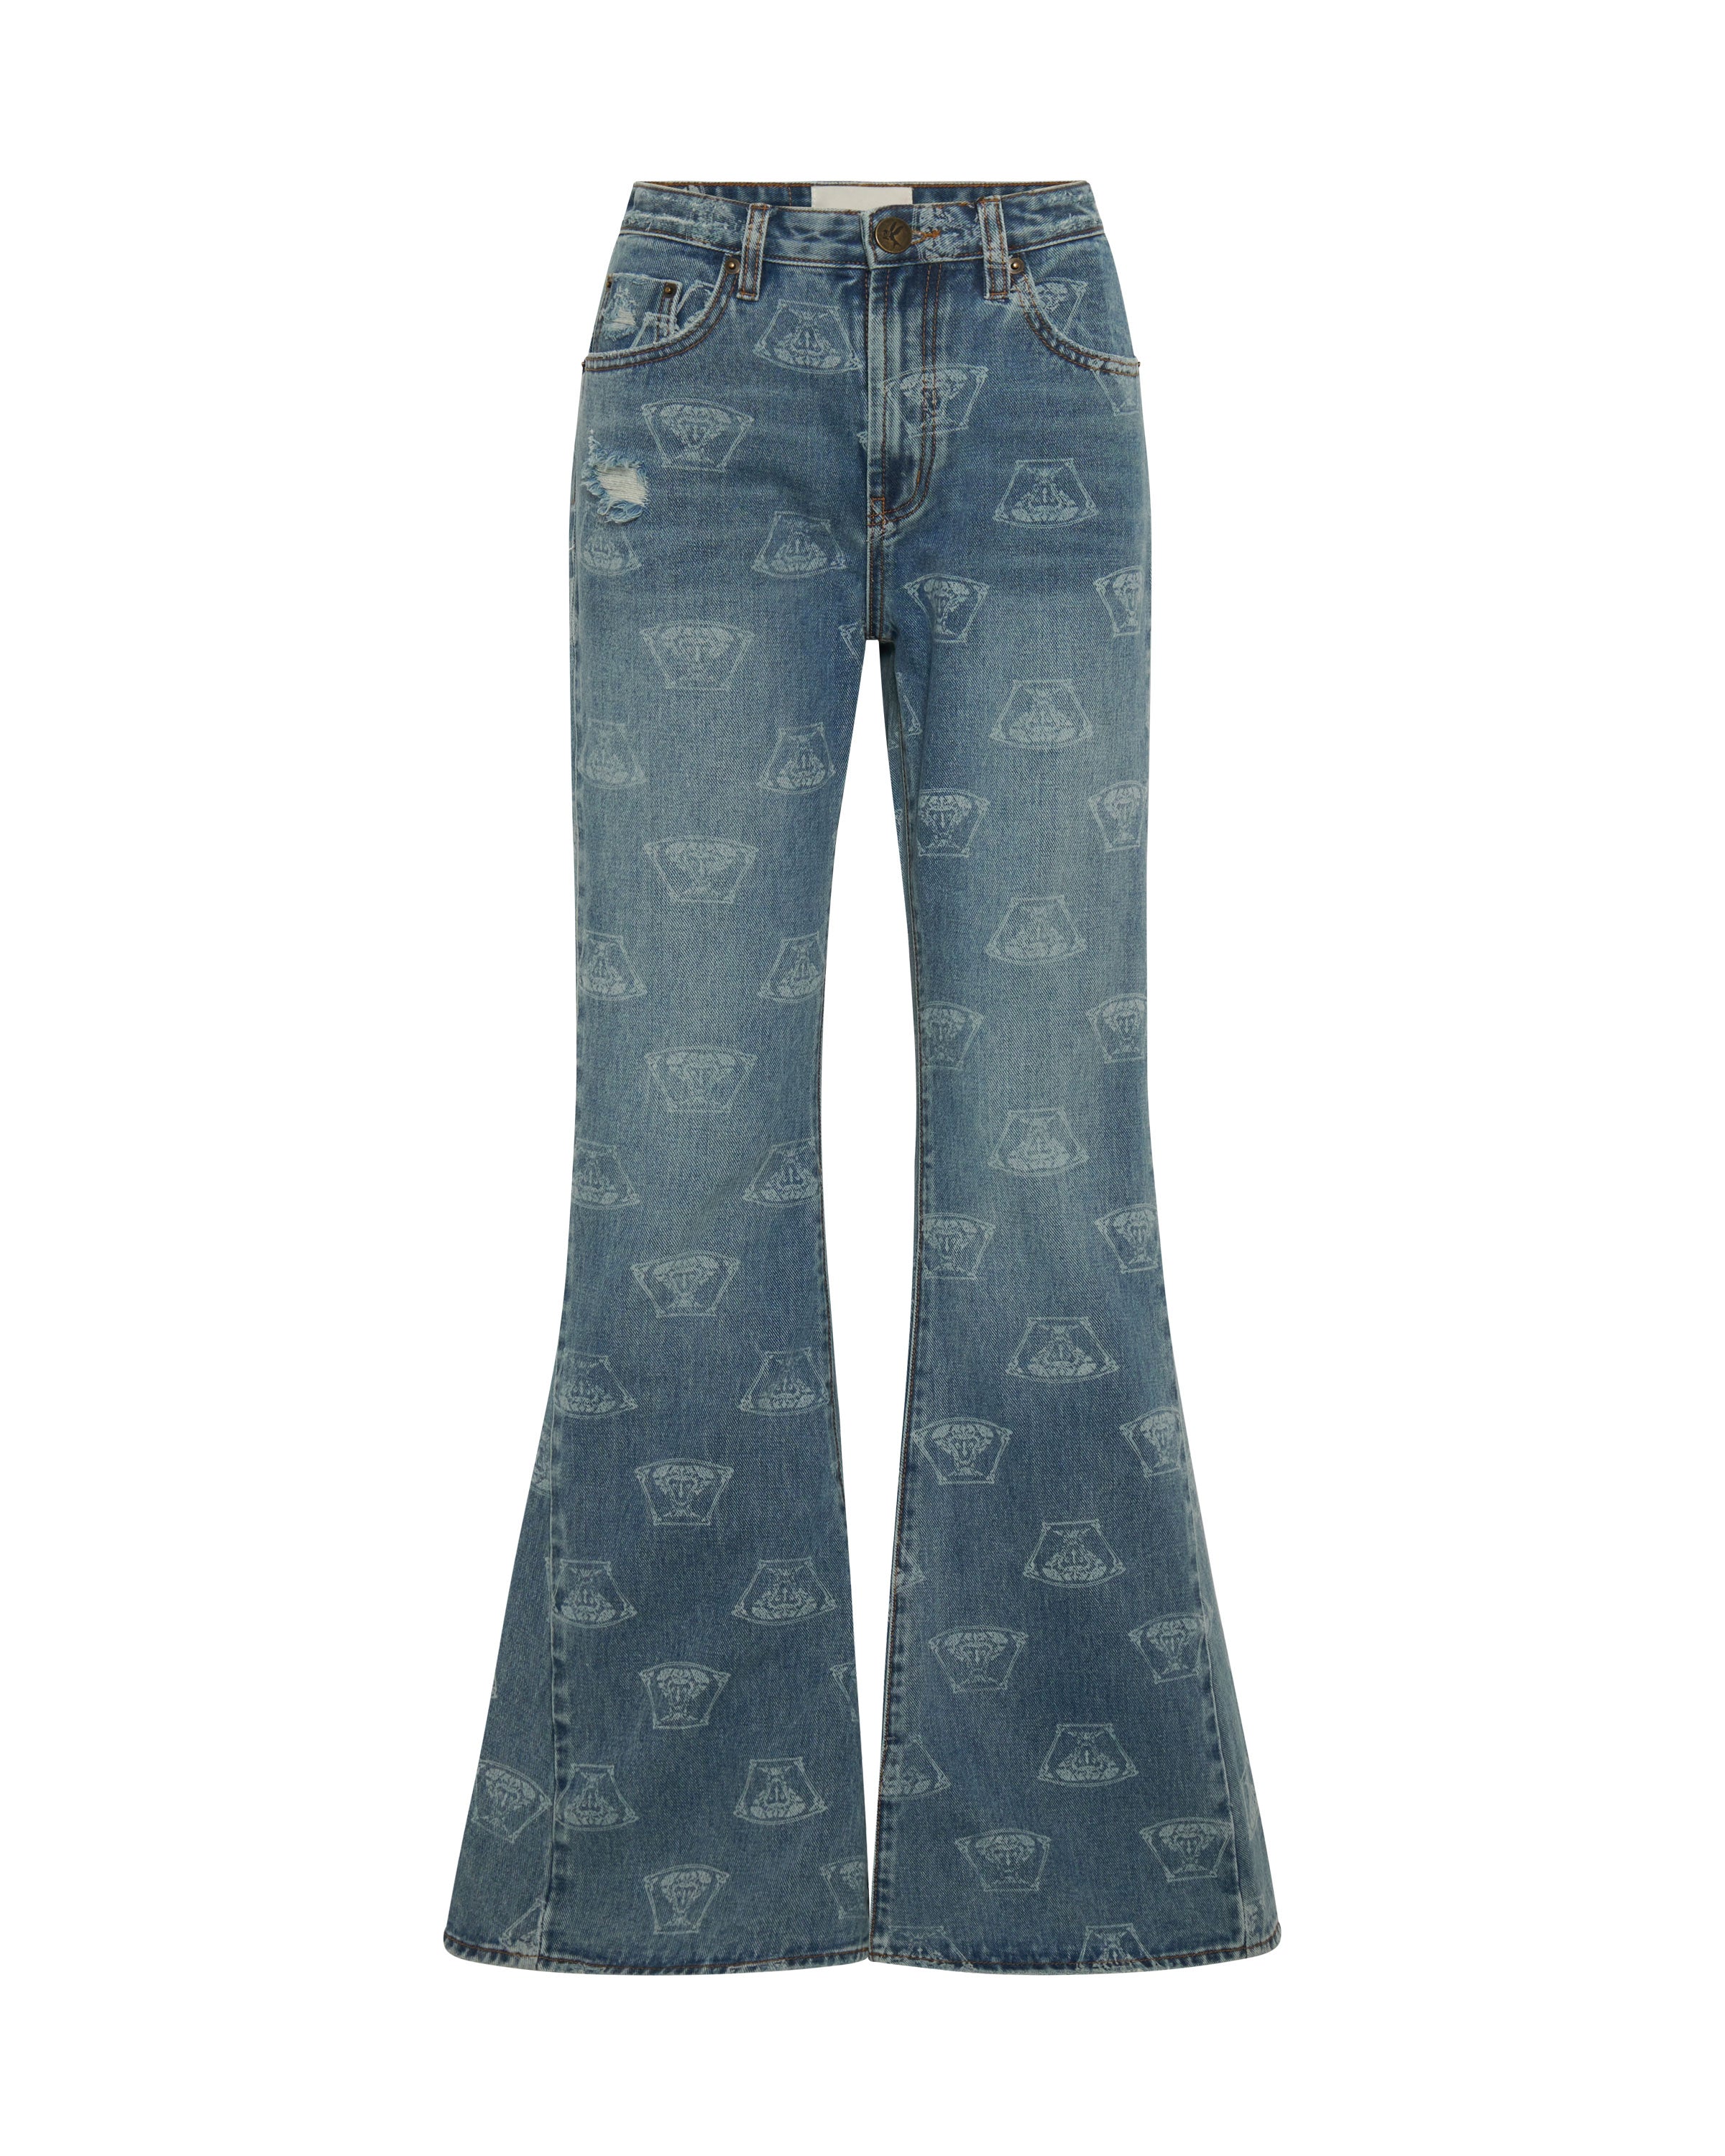 SBYOJLPB Jeans for Women Fashion Women Solid Zipper Casual Mid Waist Long  Flare Pants-S Dark Blue 4(S)